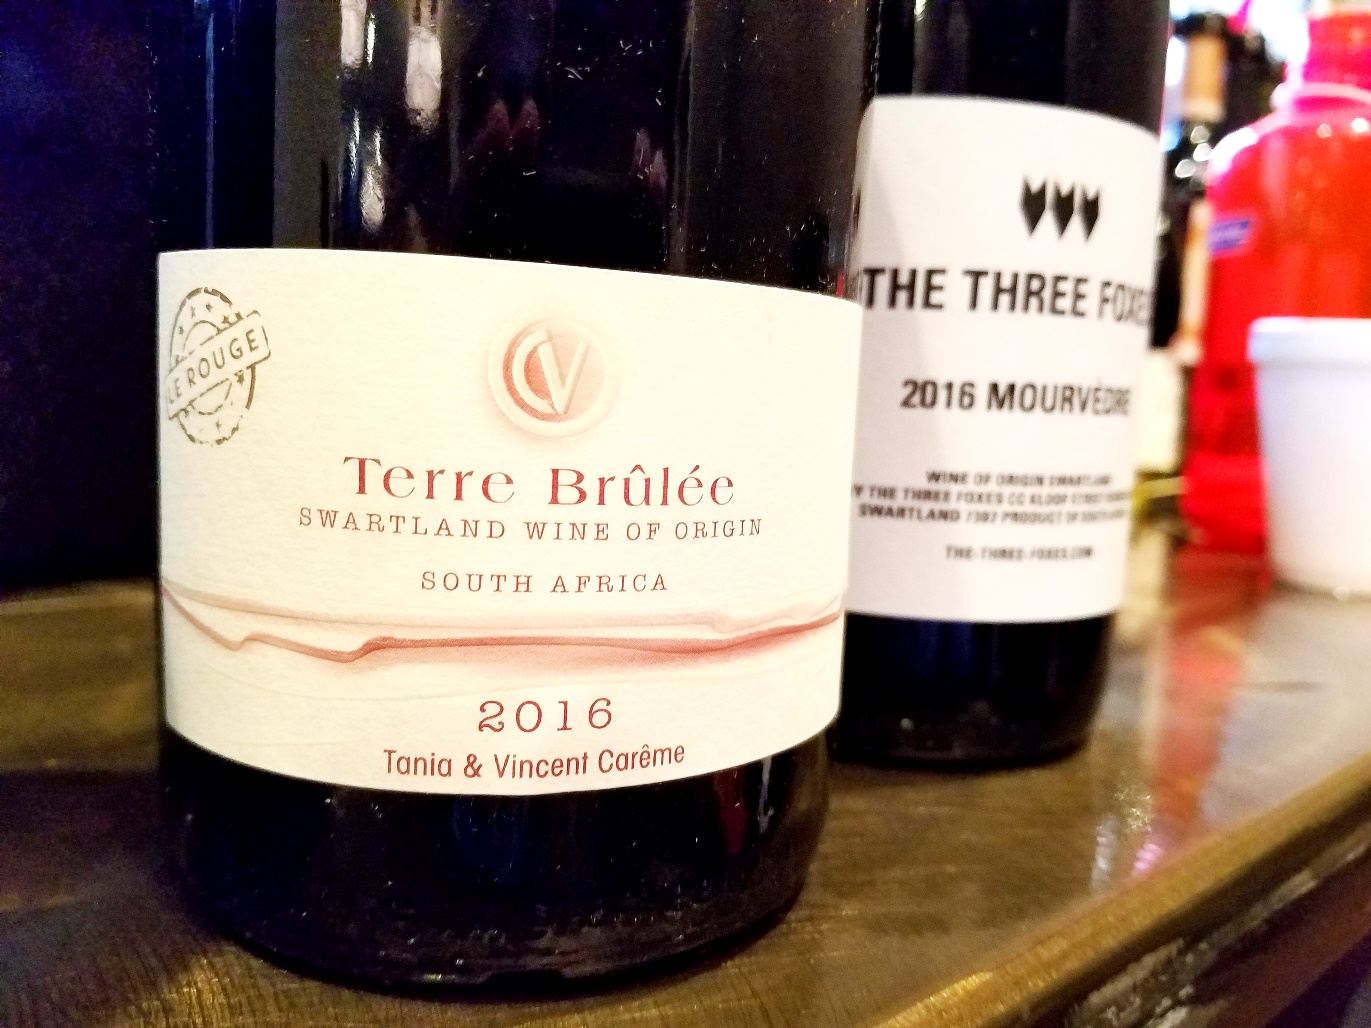 Tanie & Vincent Carême, Terre Brûlée Le Rouge 2016, Swartland, South Africa, Wine Casual